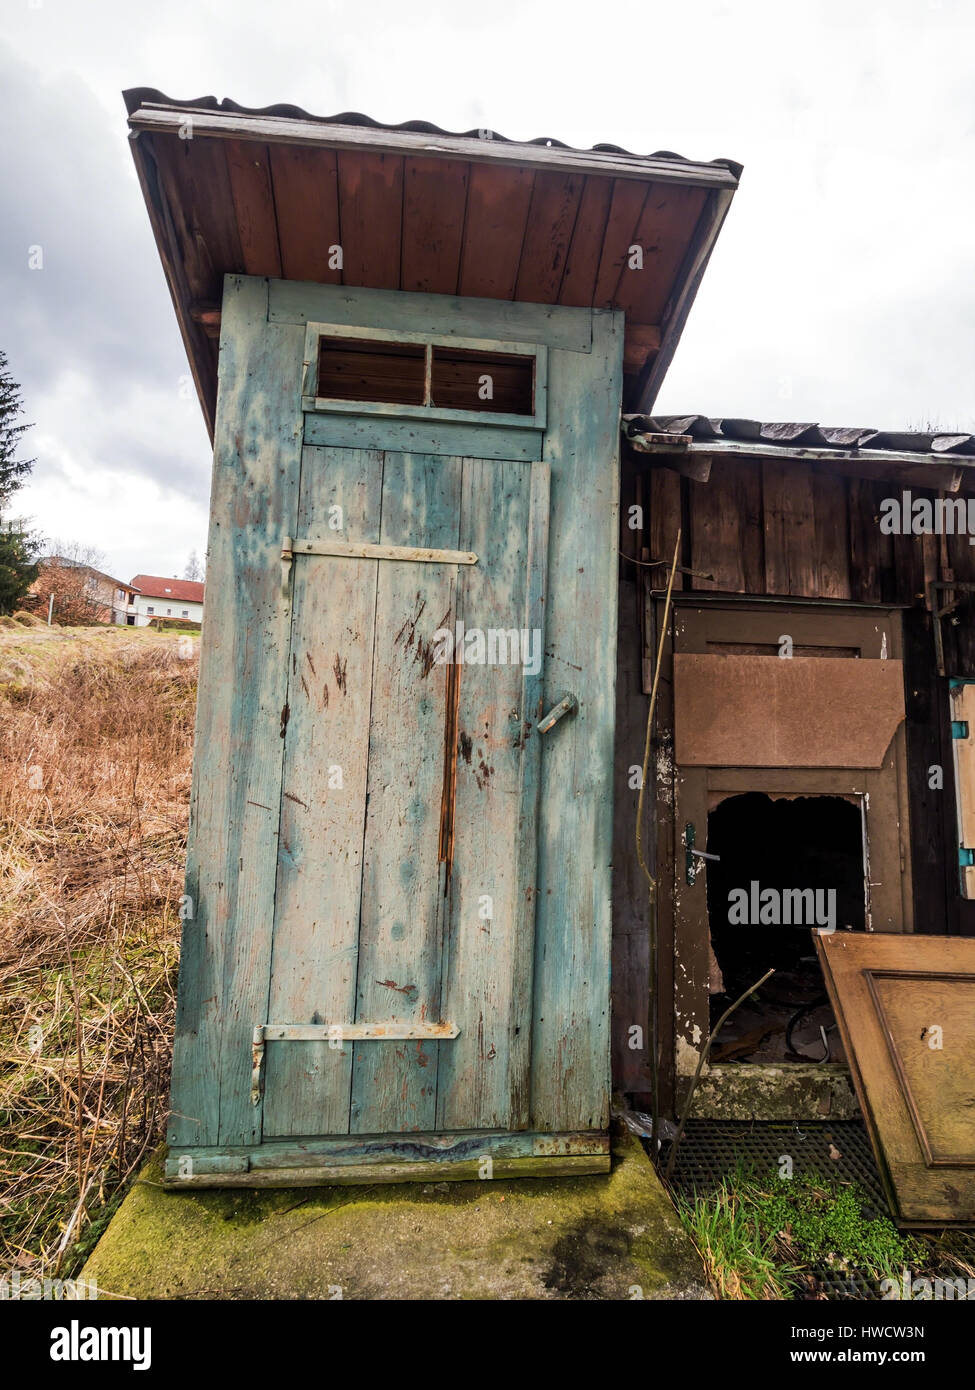 Toilet outside in old, desolate house., Toilette im Freien in einem alte, verlassenen Haus. Stock Photo